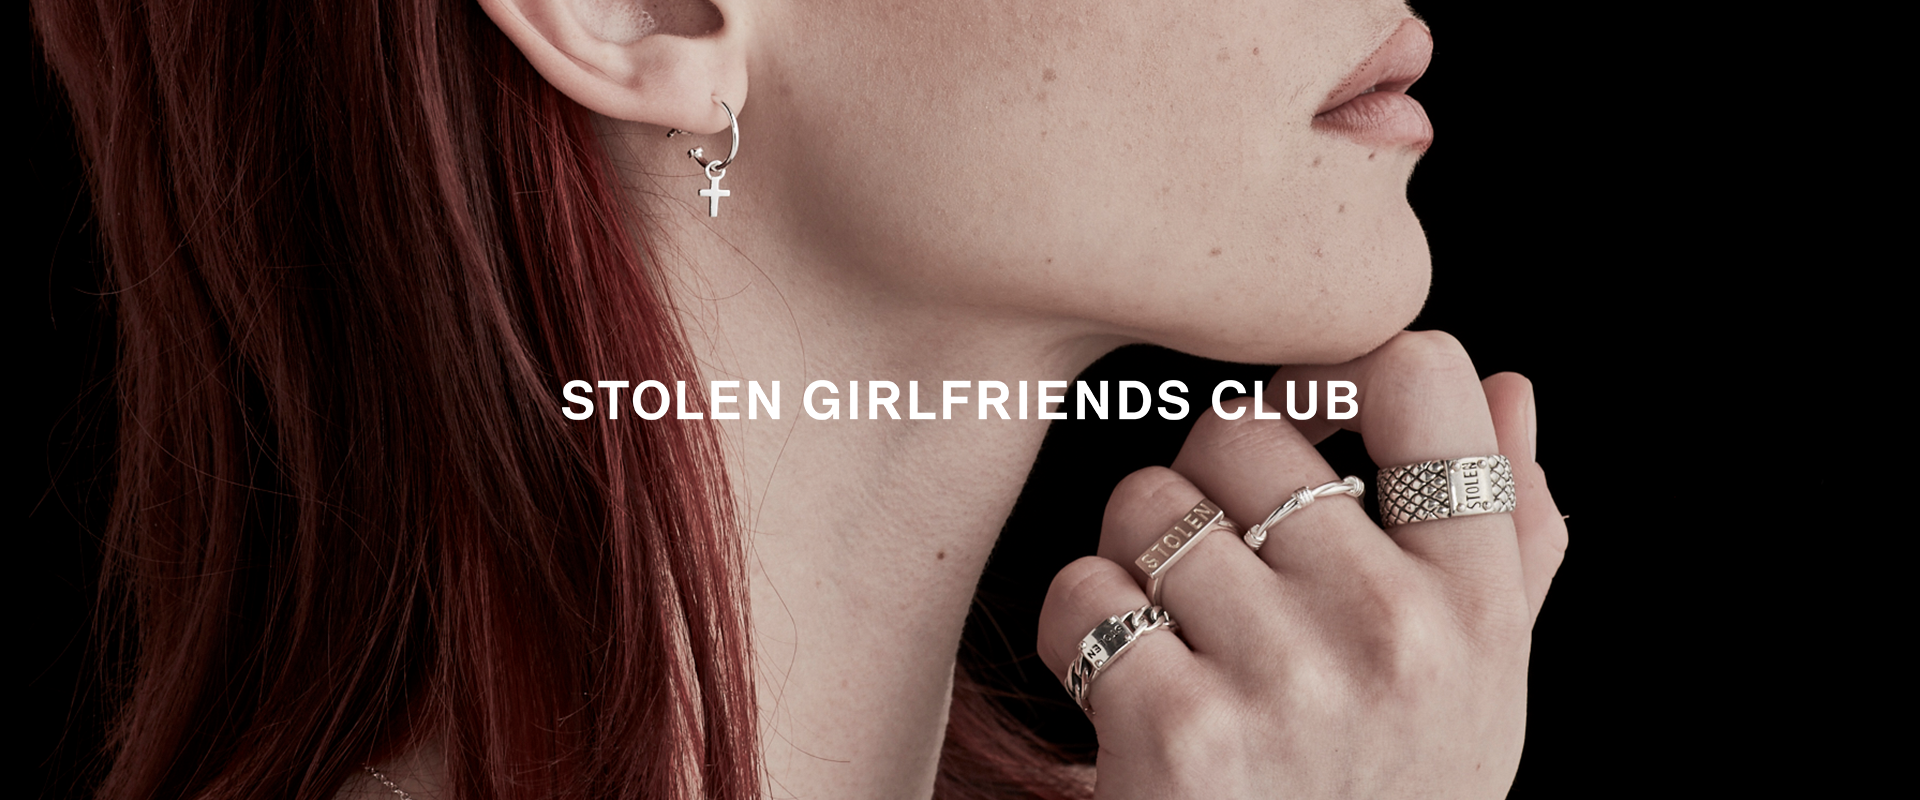 Stolen Girlfriends Club - For rebellious hearts